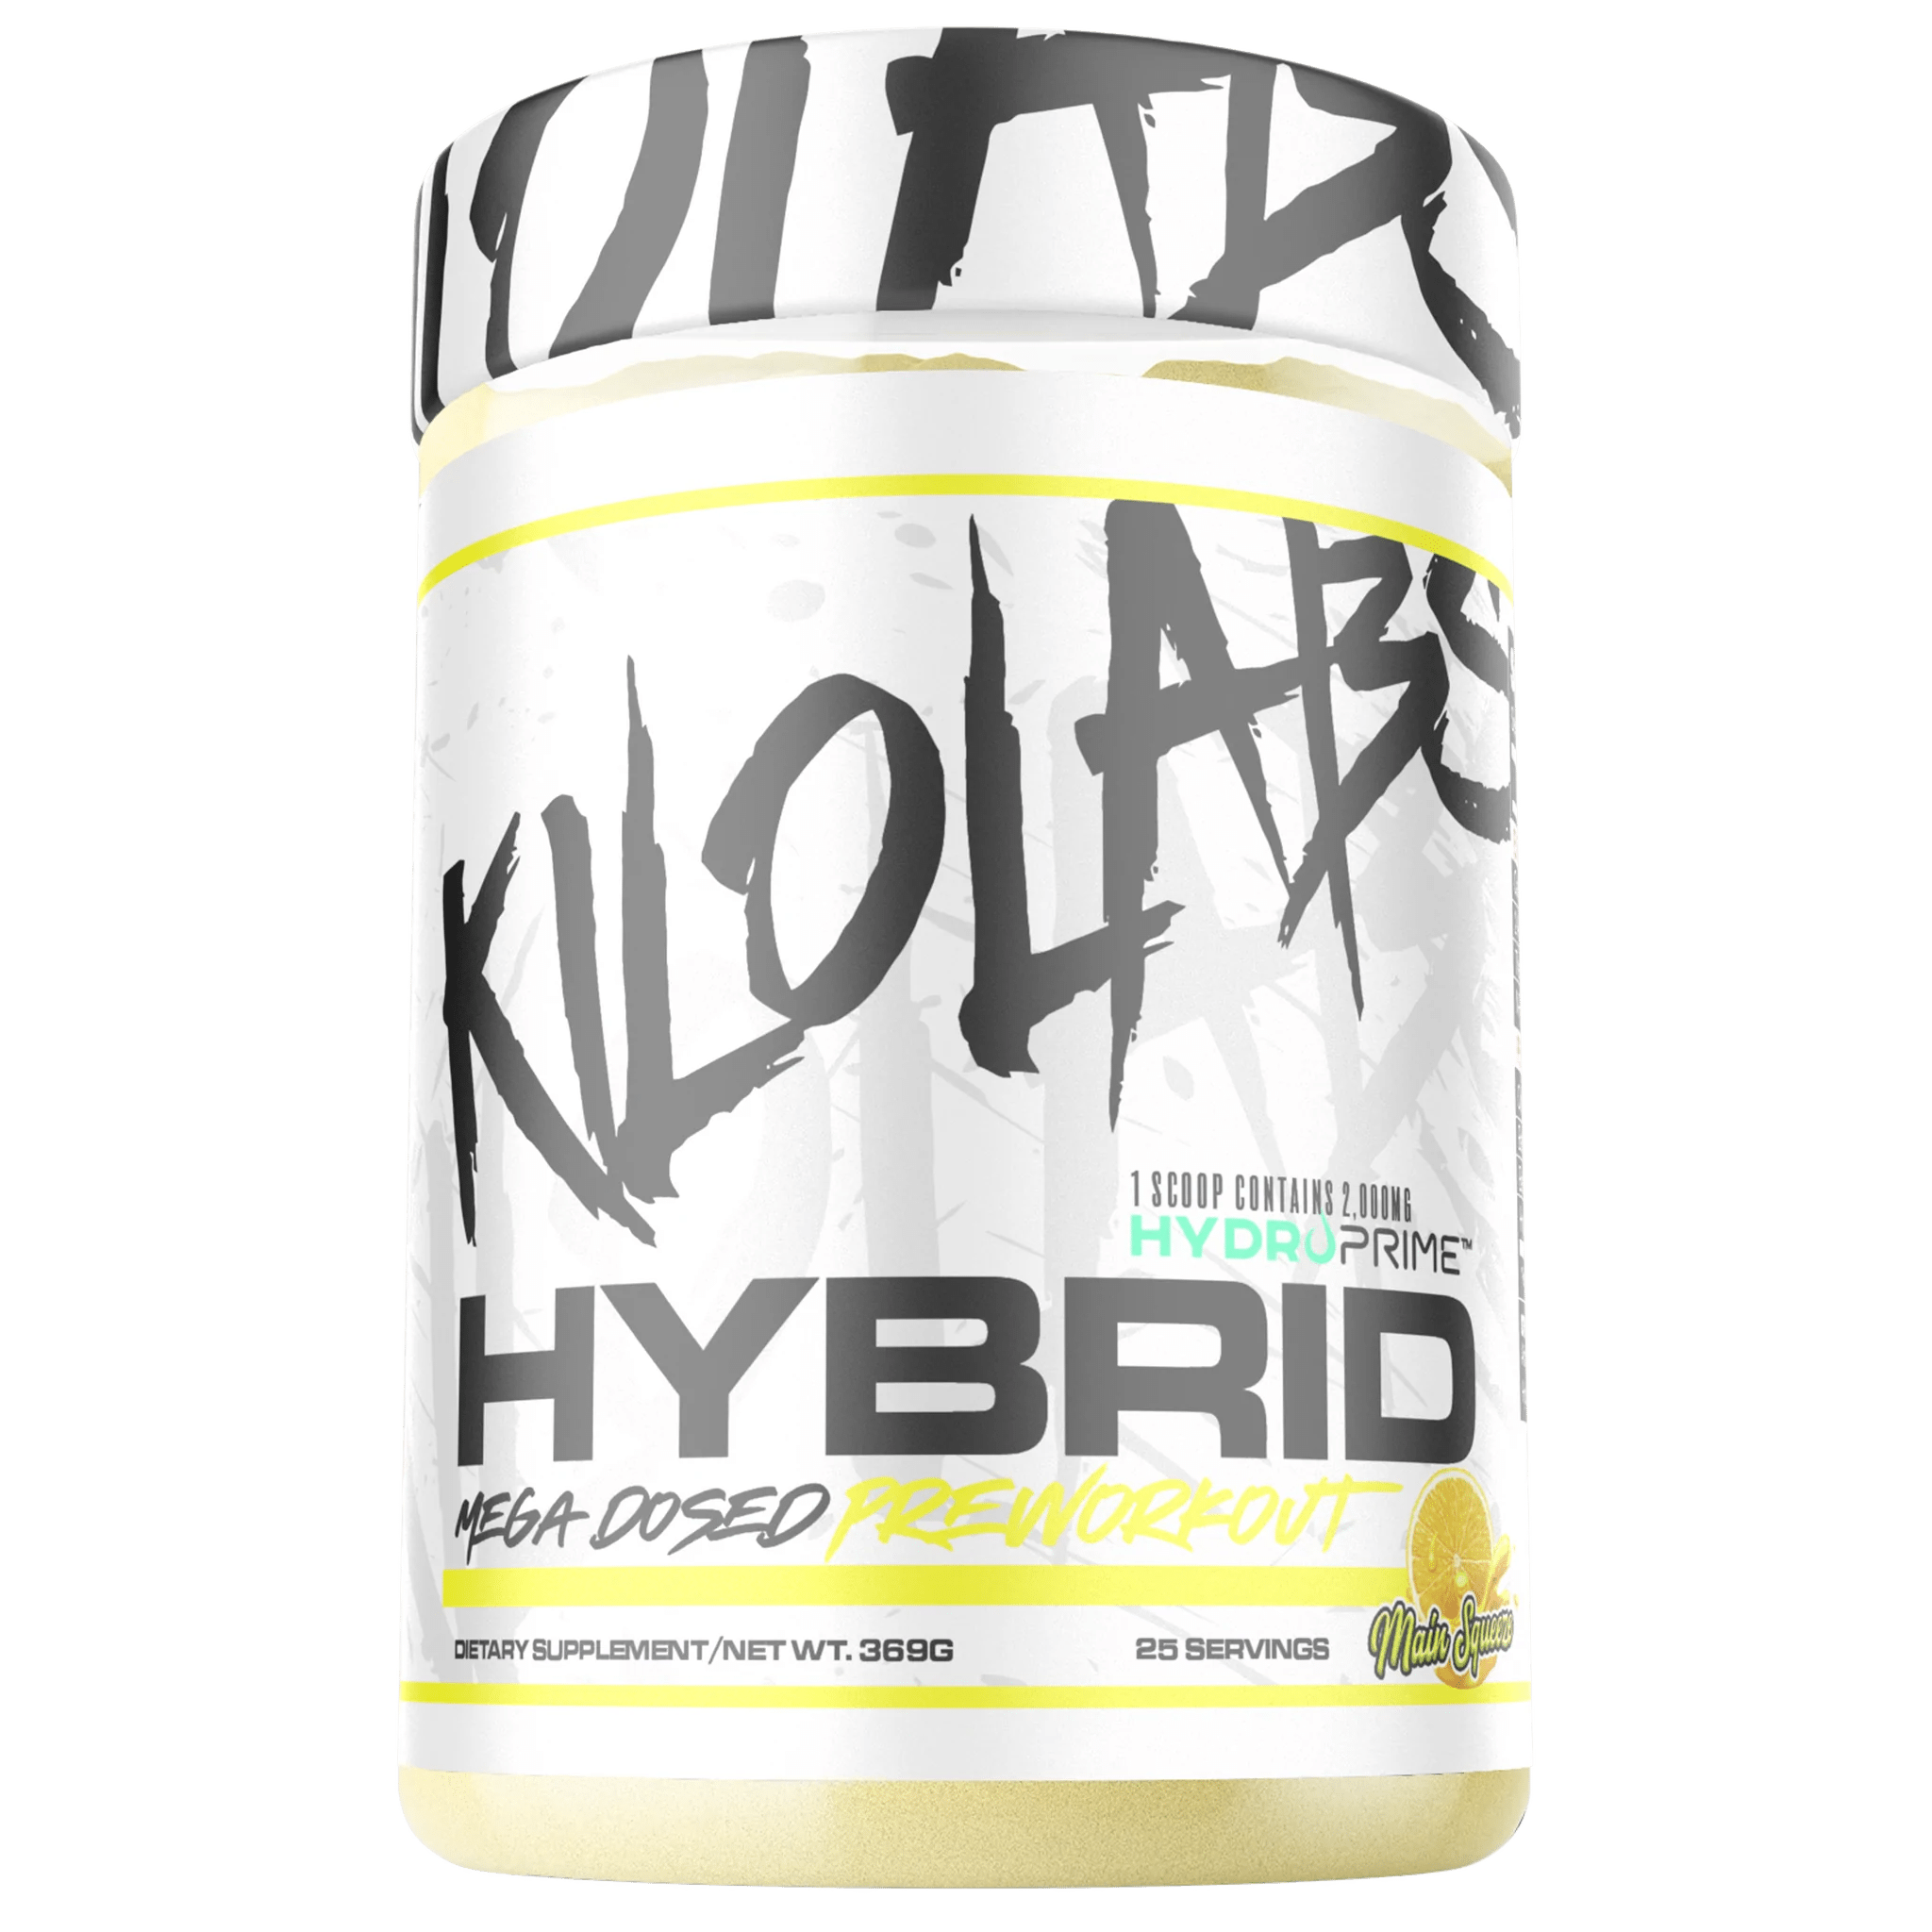 Hybrid high stim pwo kilolabs hos supplementstore.se